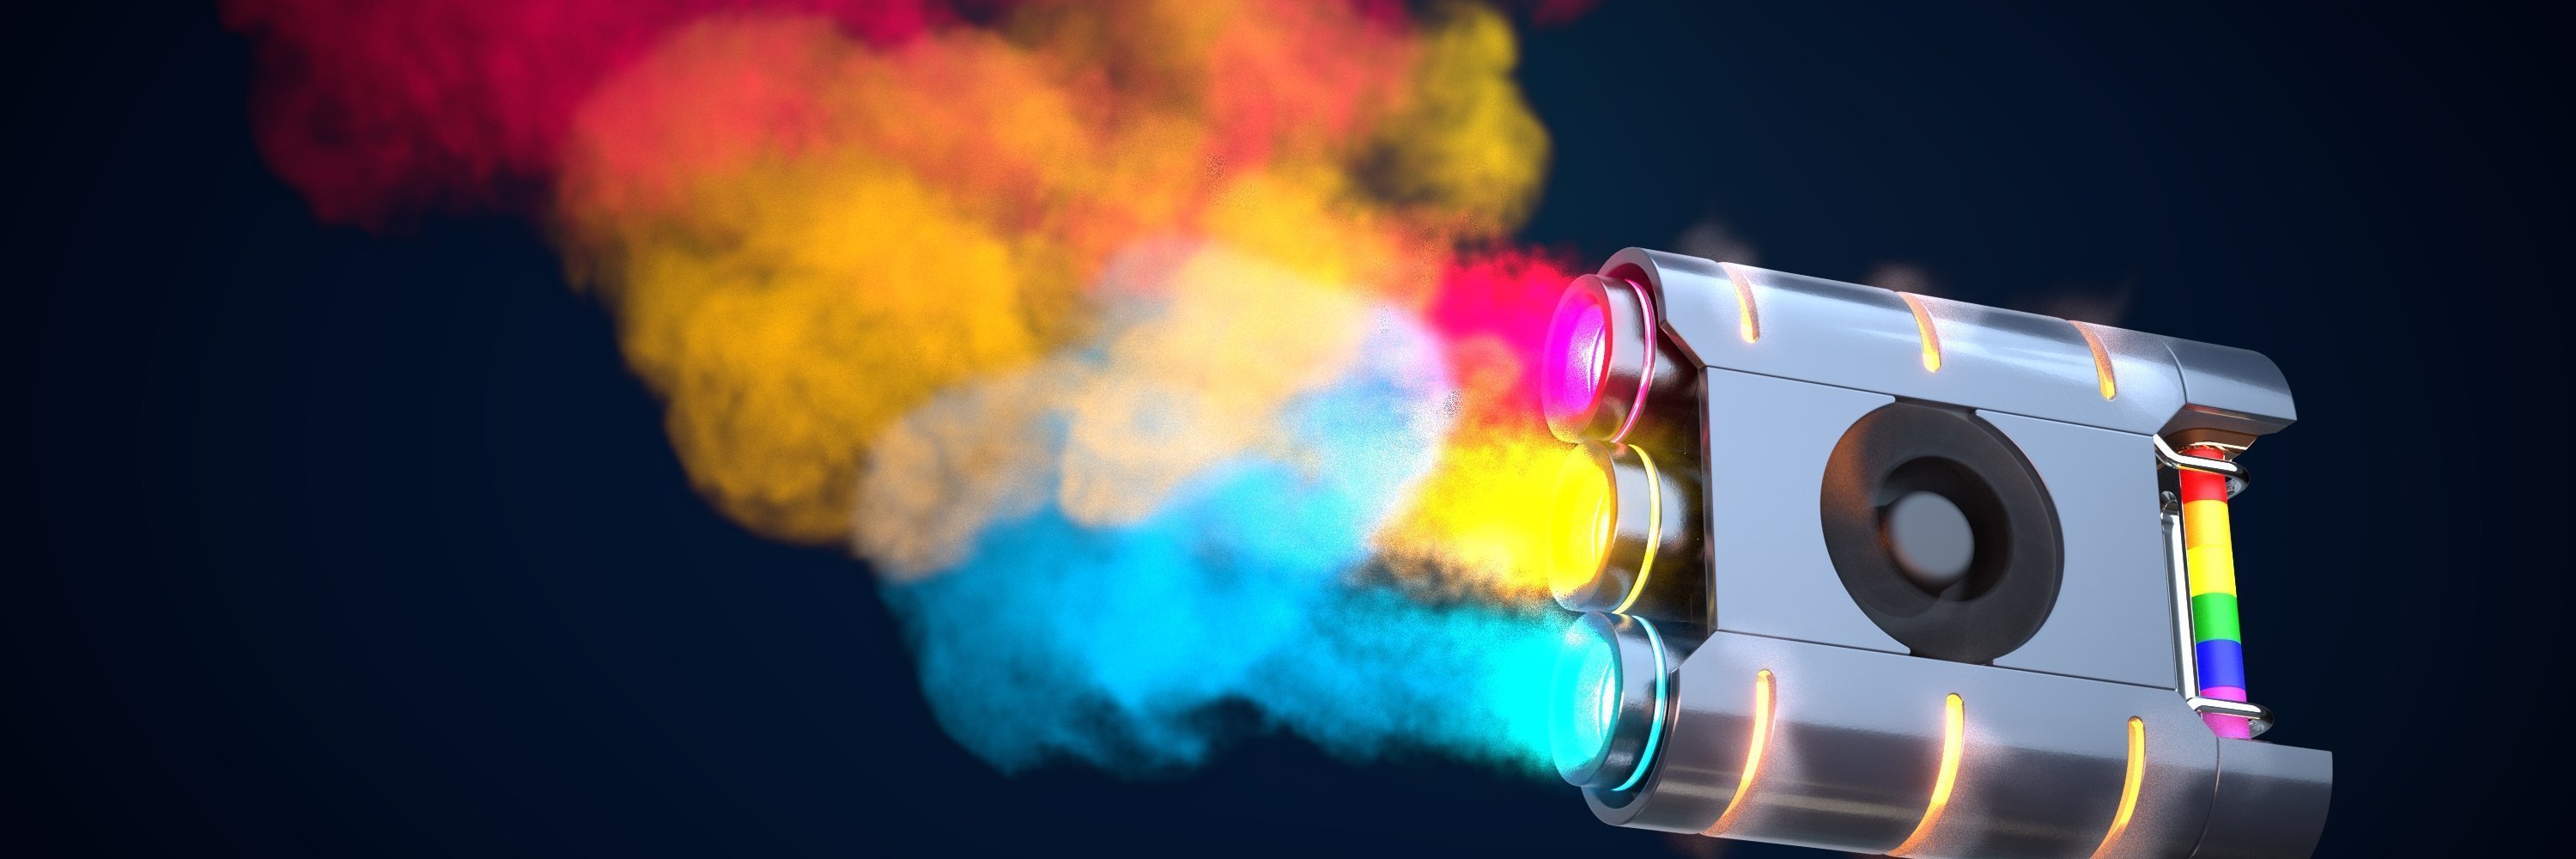 Art Spotlight: Pride 2021 - Pansexual Pride Smoke Gadget - Sketchfab ...